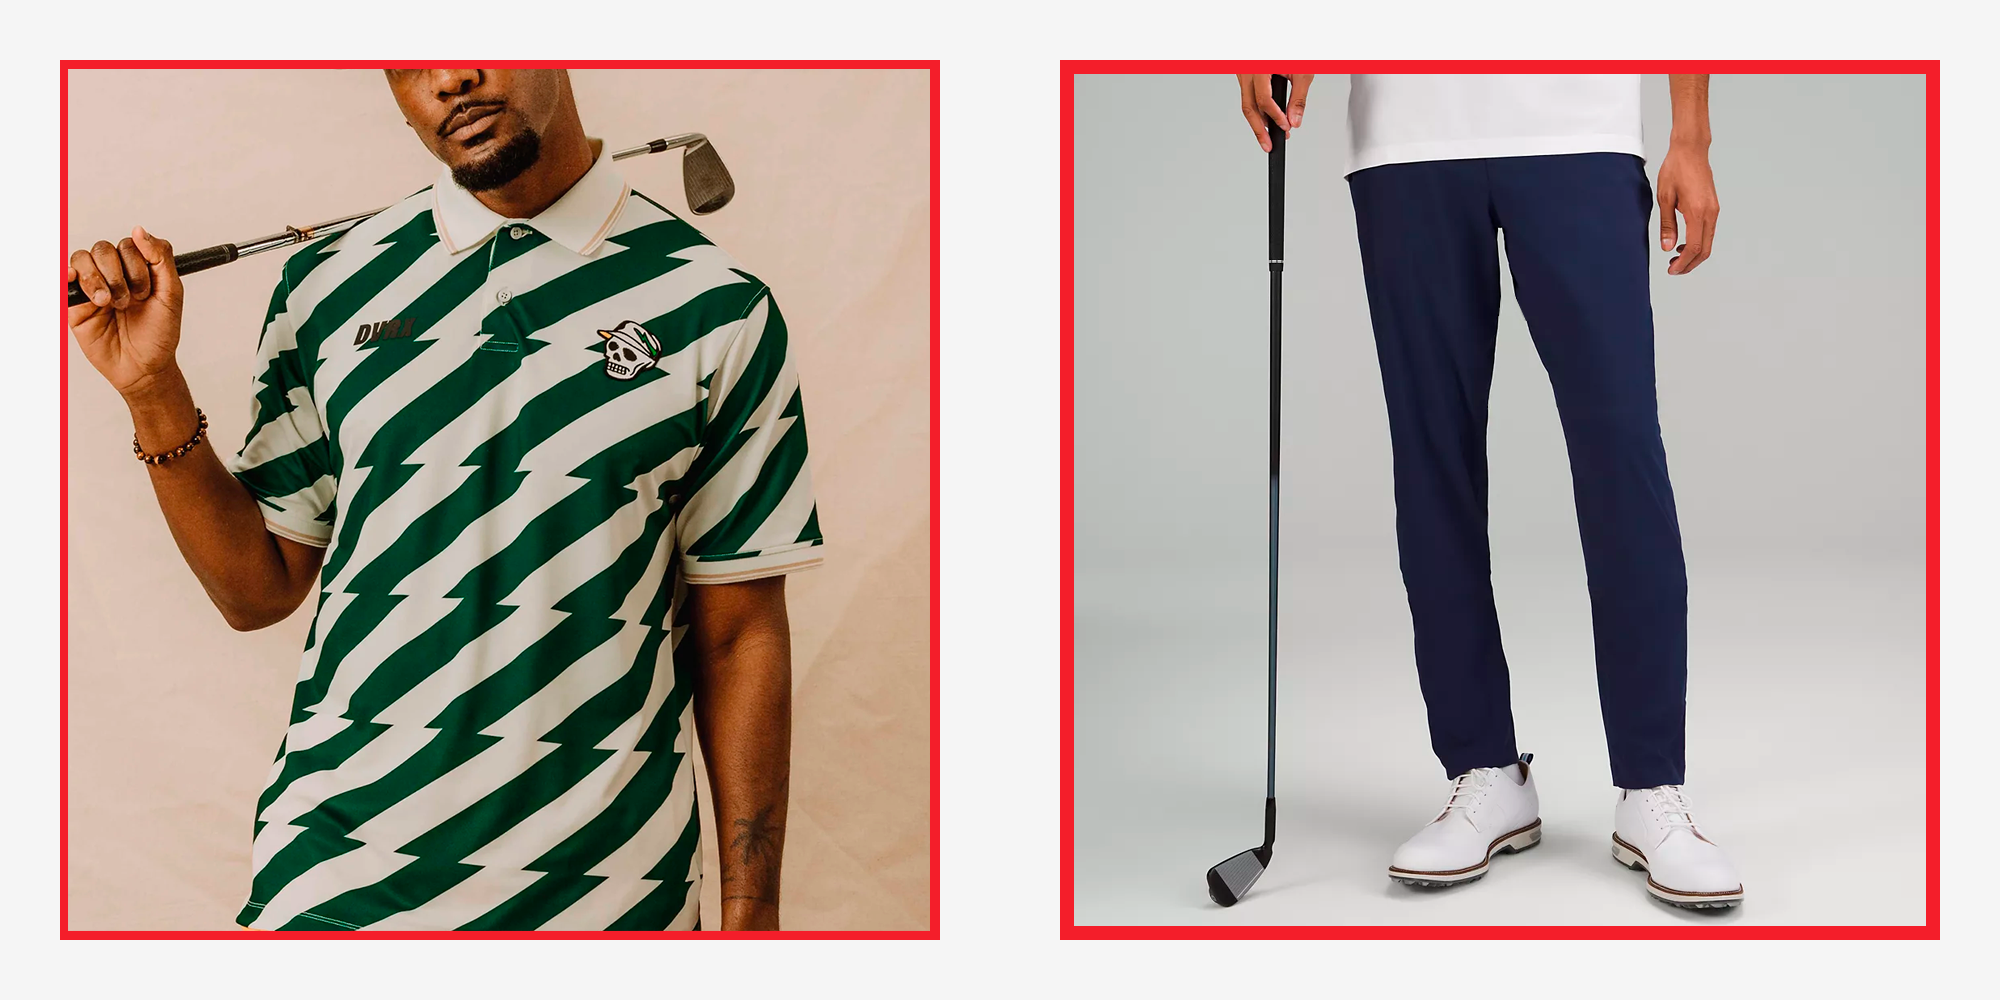 25 Best Golf Clothing Brands